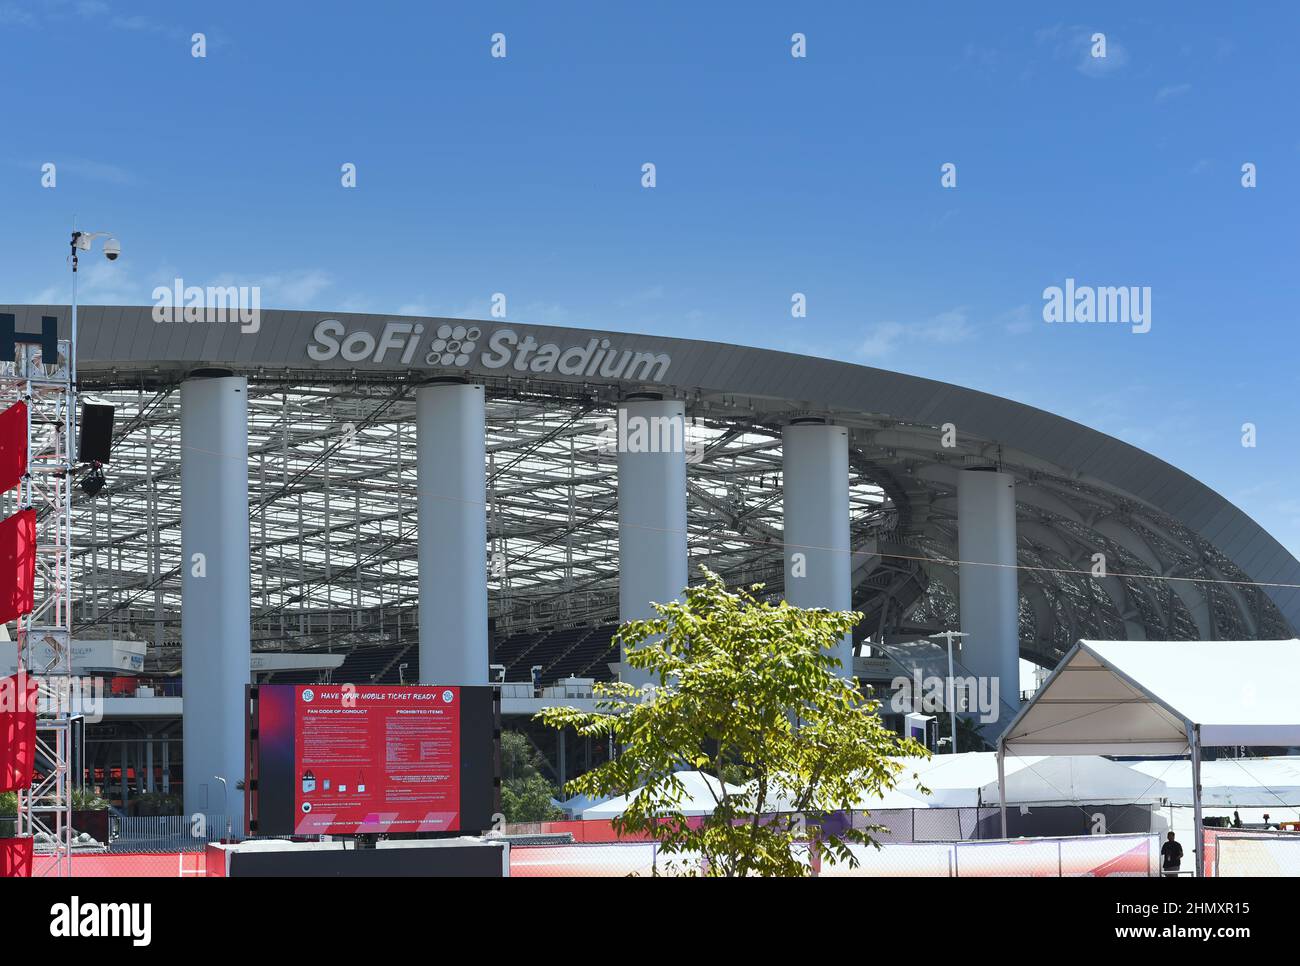 sofi stadium outside